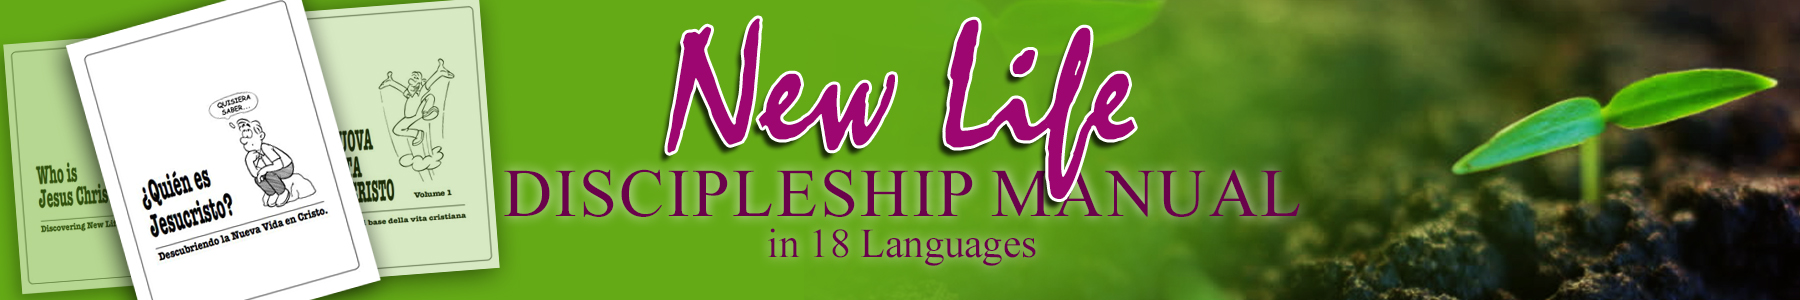 New Life Discipleship Manual